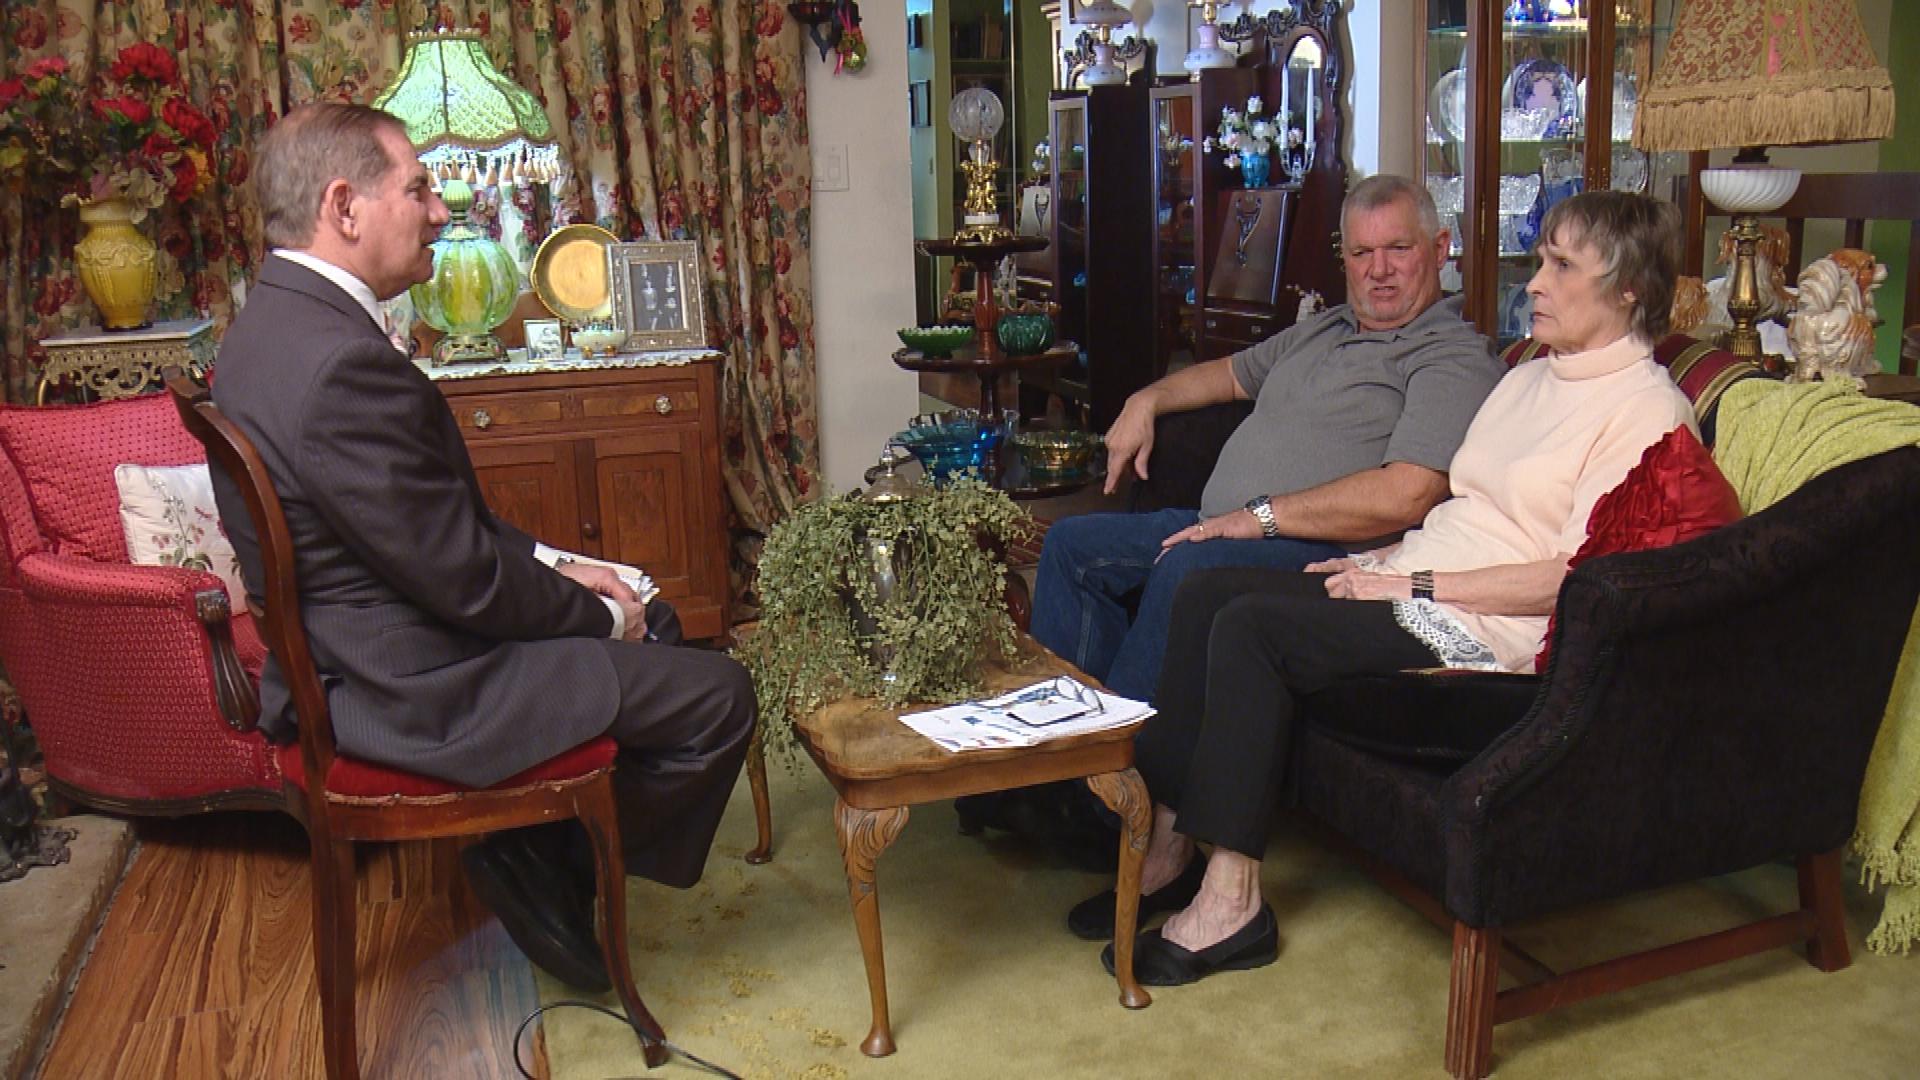 CBS4's Rick Sallinger interviews the couple.(credit: CBS)